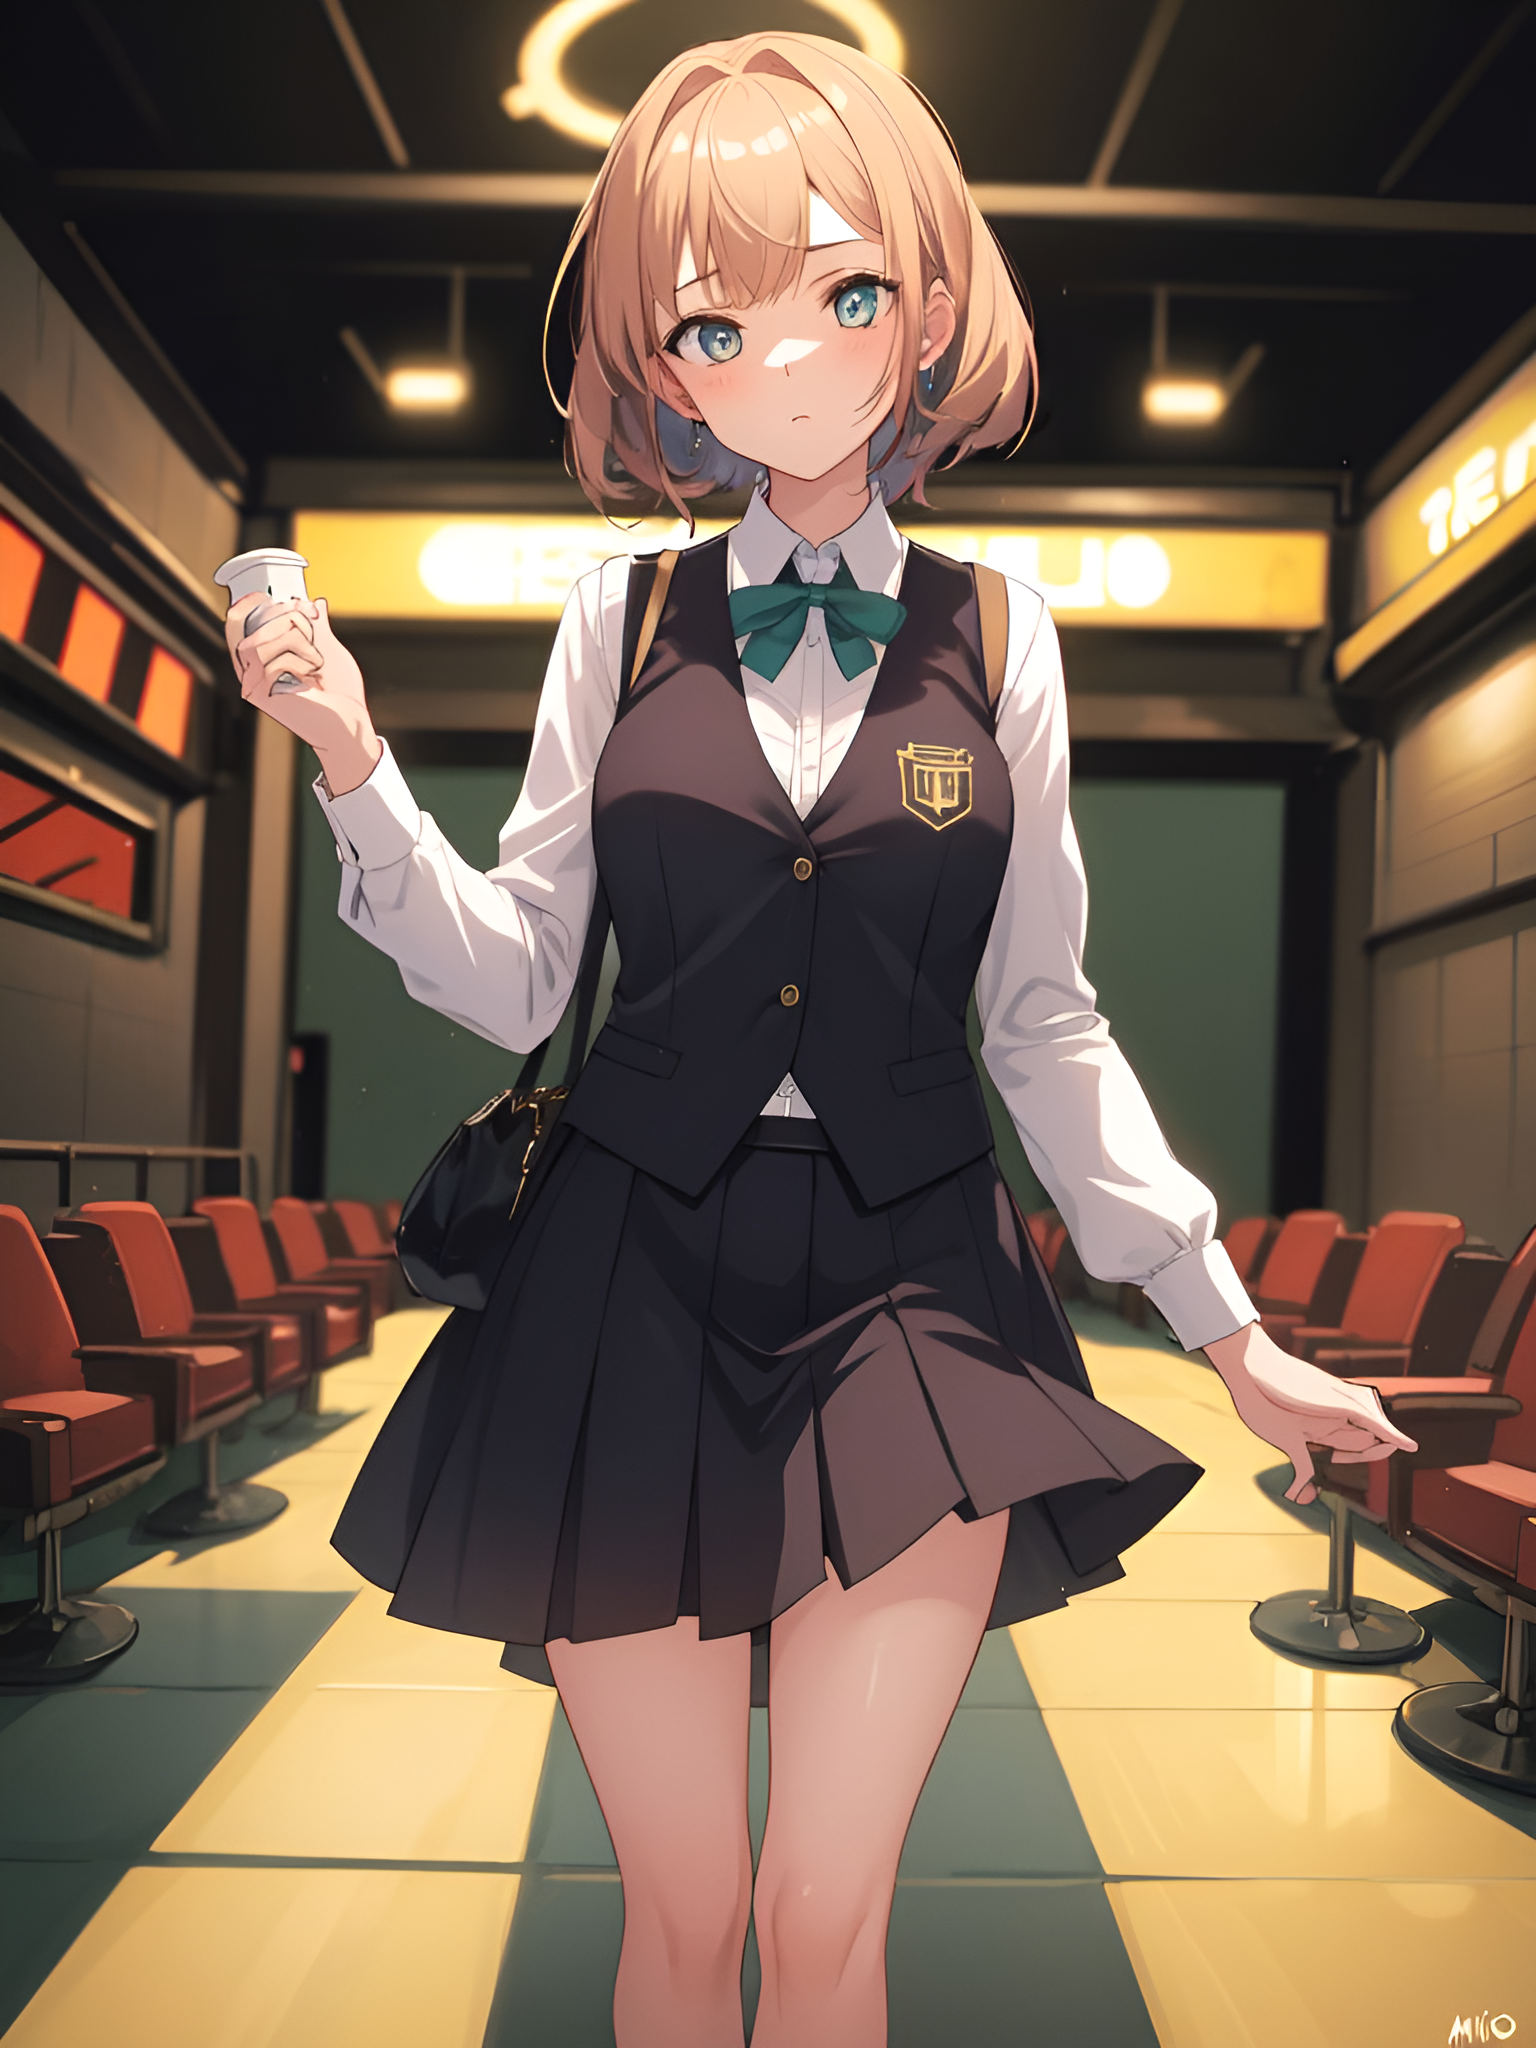 Anime 1536x2048 AI art anime girls portrait display bow tie uniform looking at viewer short hair chair